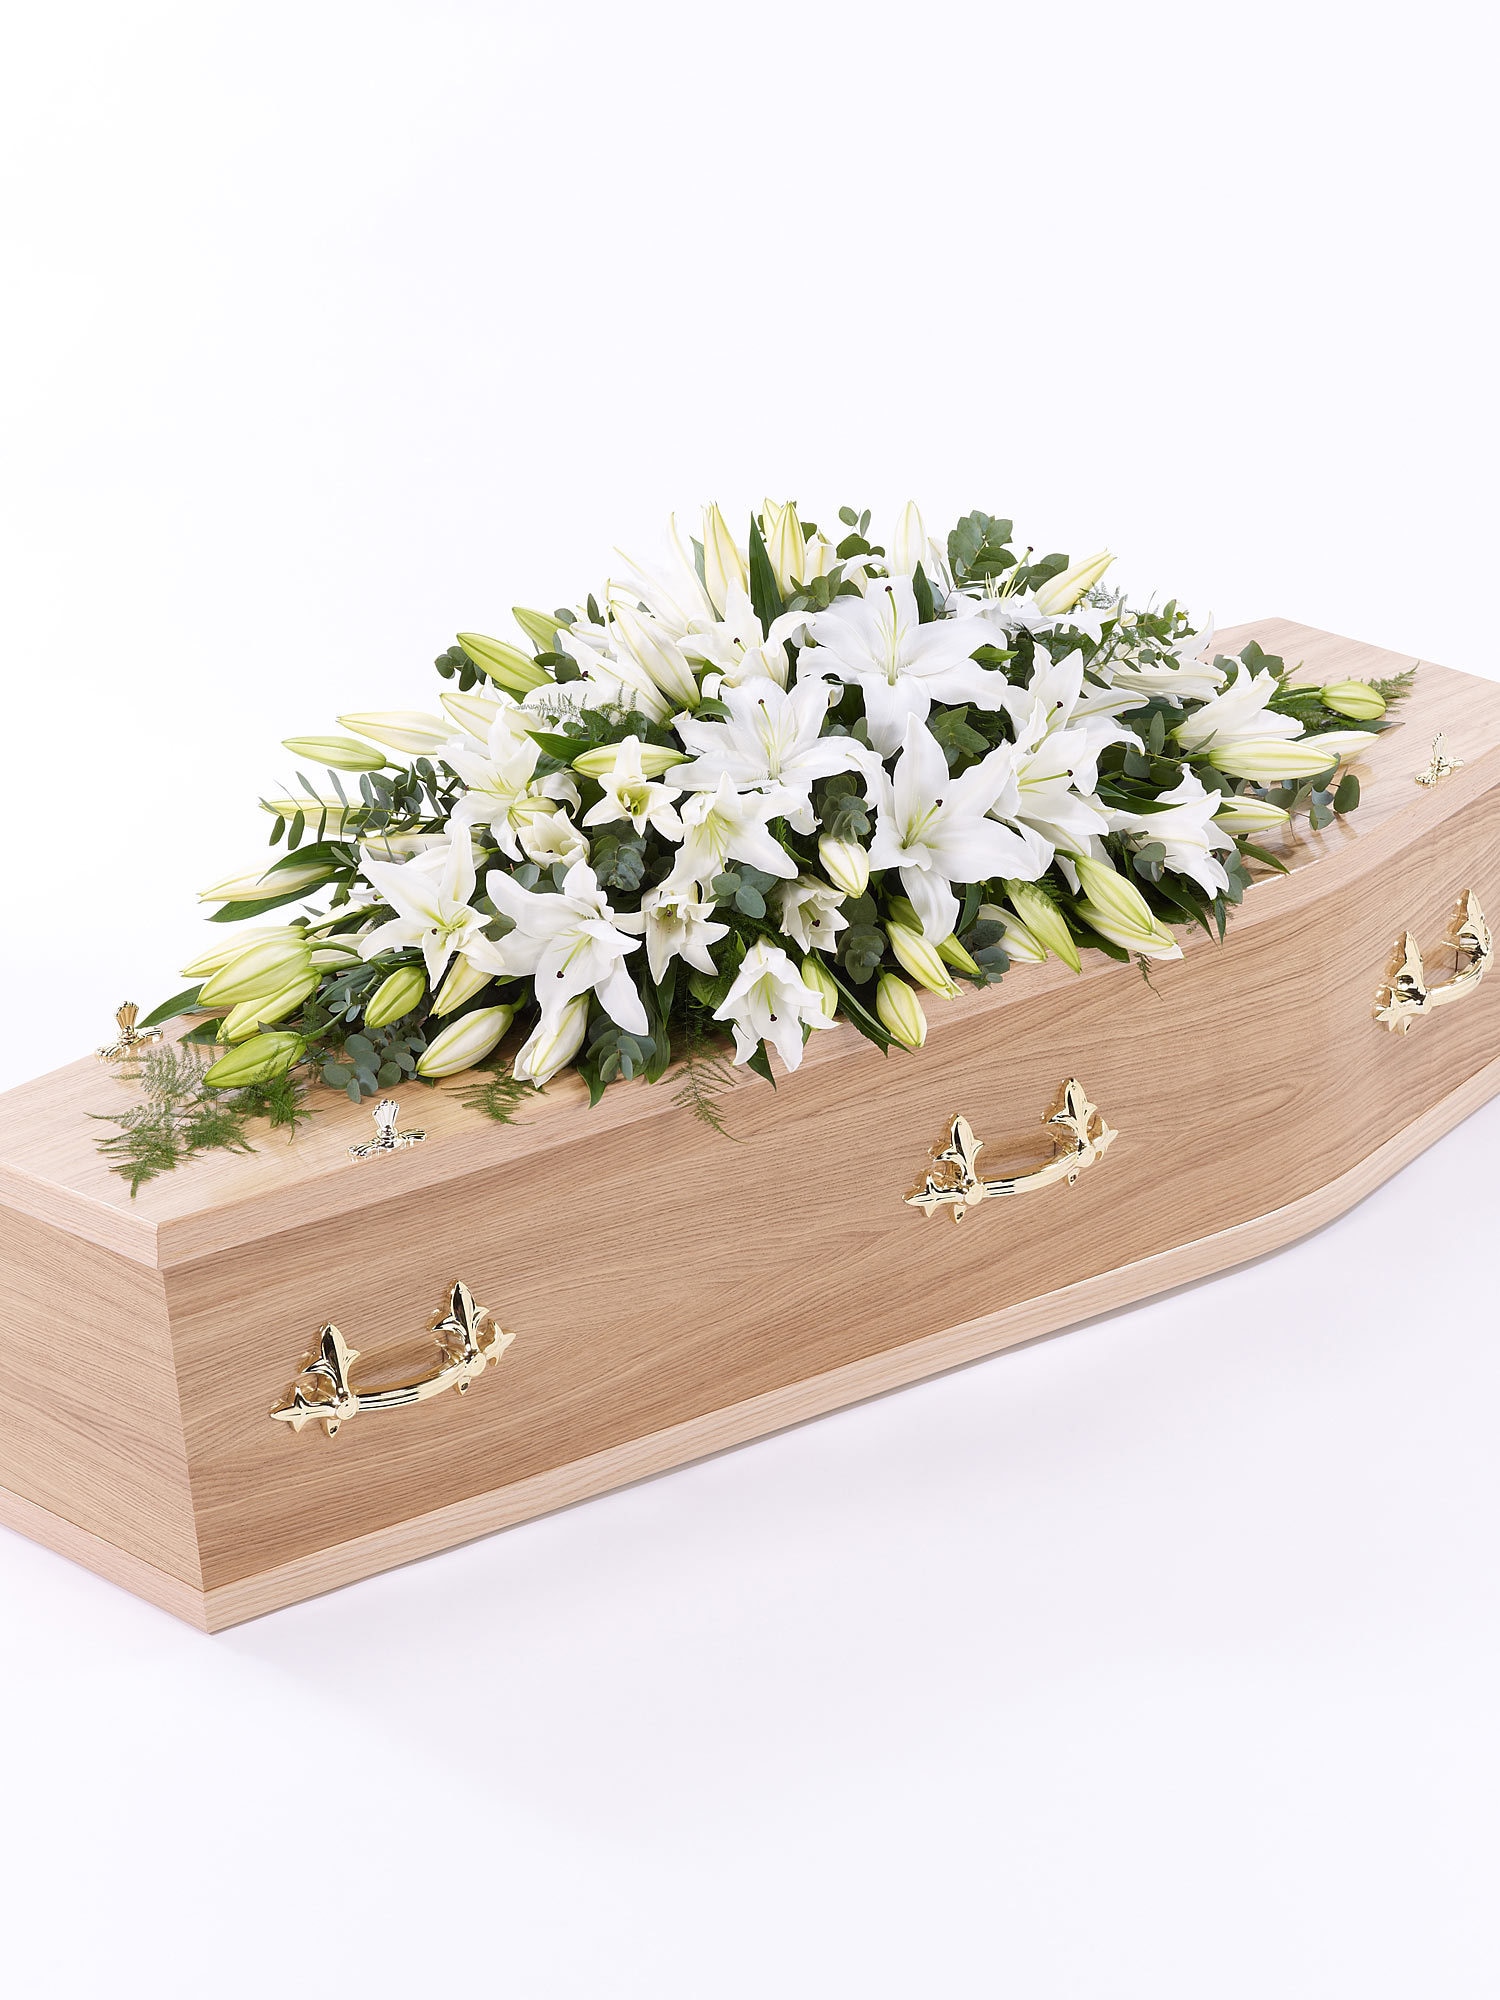 LILY CASKET SPRAY Funeral Casket Spray Flowers